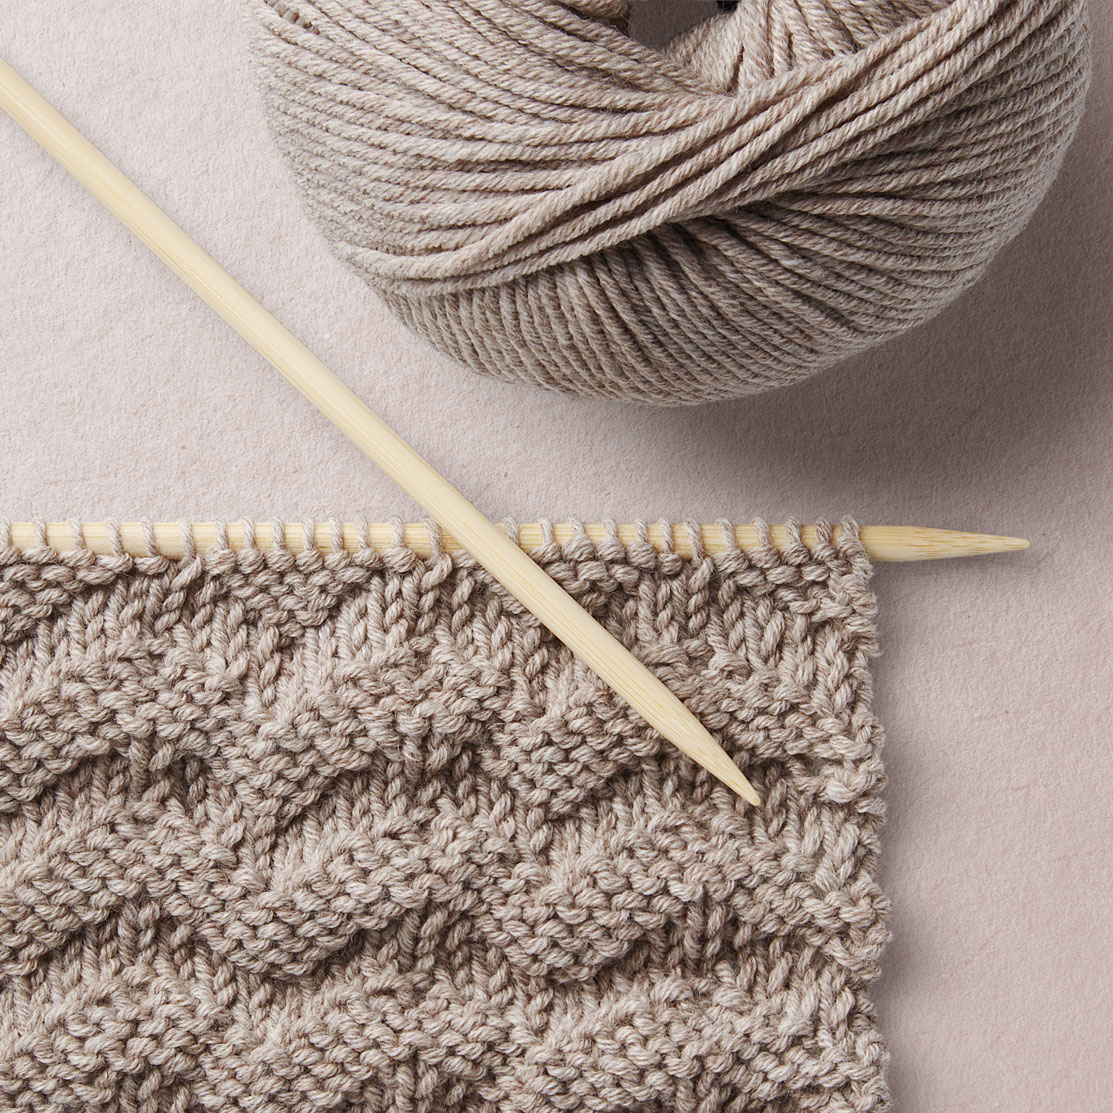 Wavy Stitch Knit Pattern Wool School, Happy Knitting